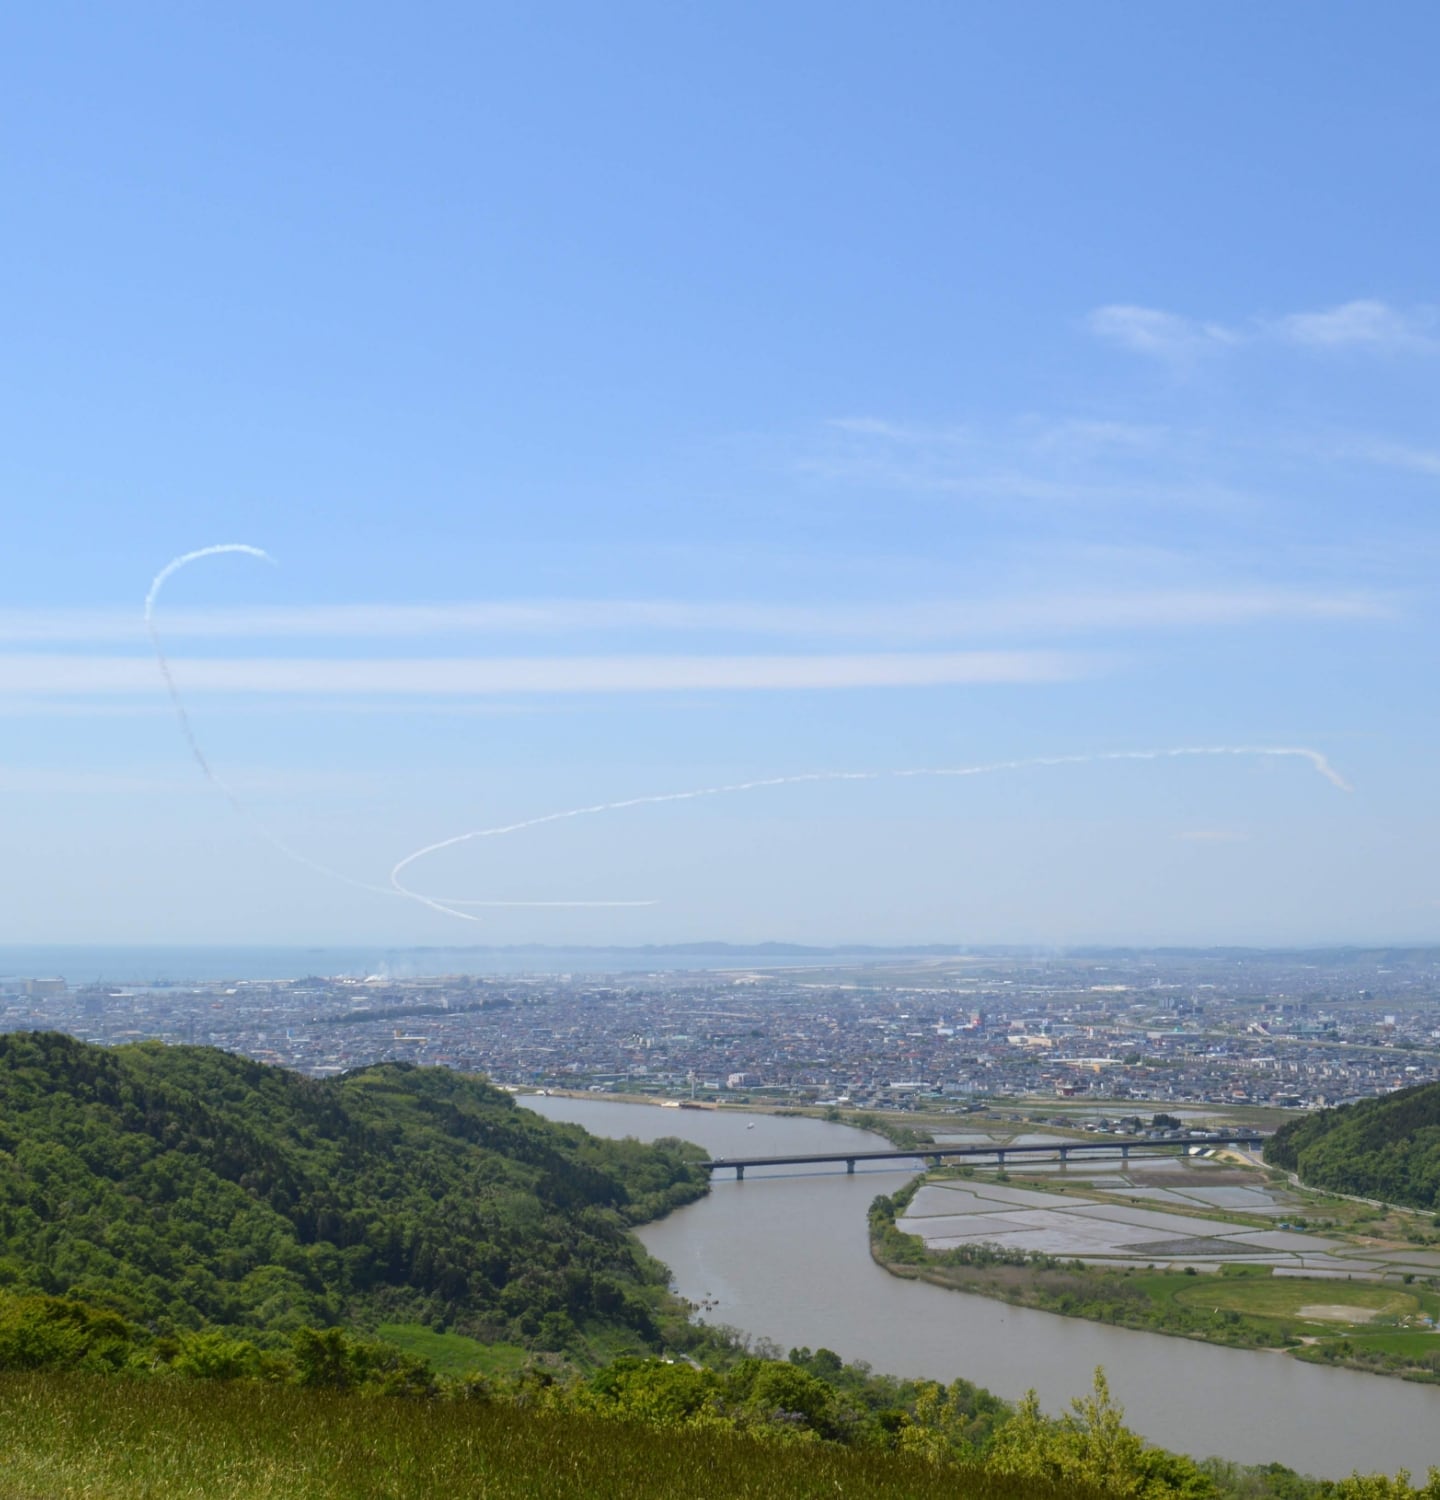 migakiba ishinomakiのイメージ画像。石巻の曽波神大橋を中心に、流れる川と遠景に町並みが写っています。